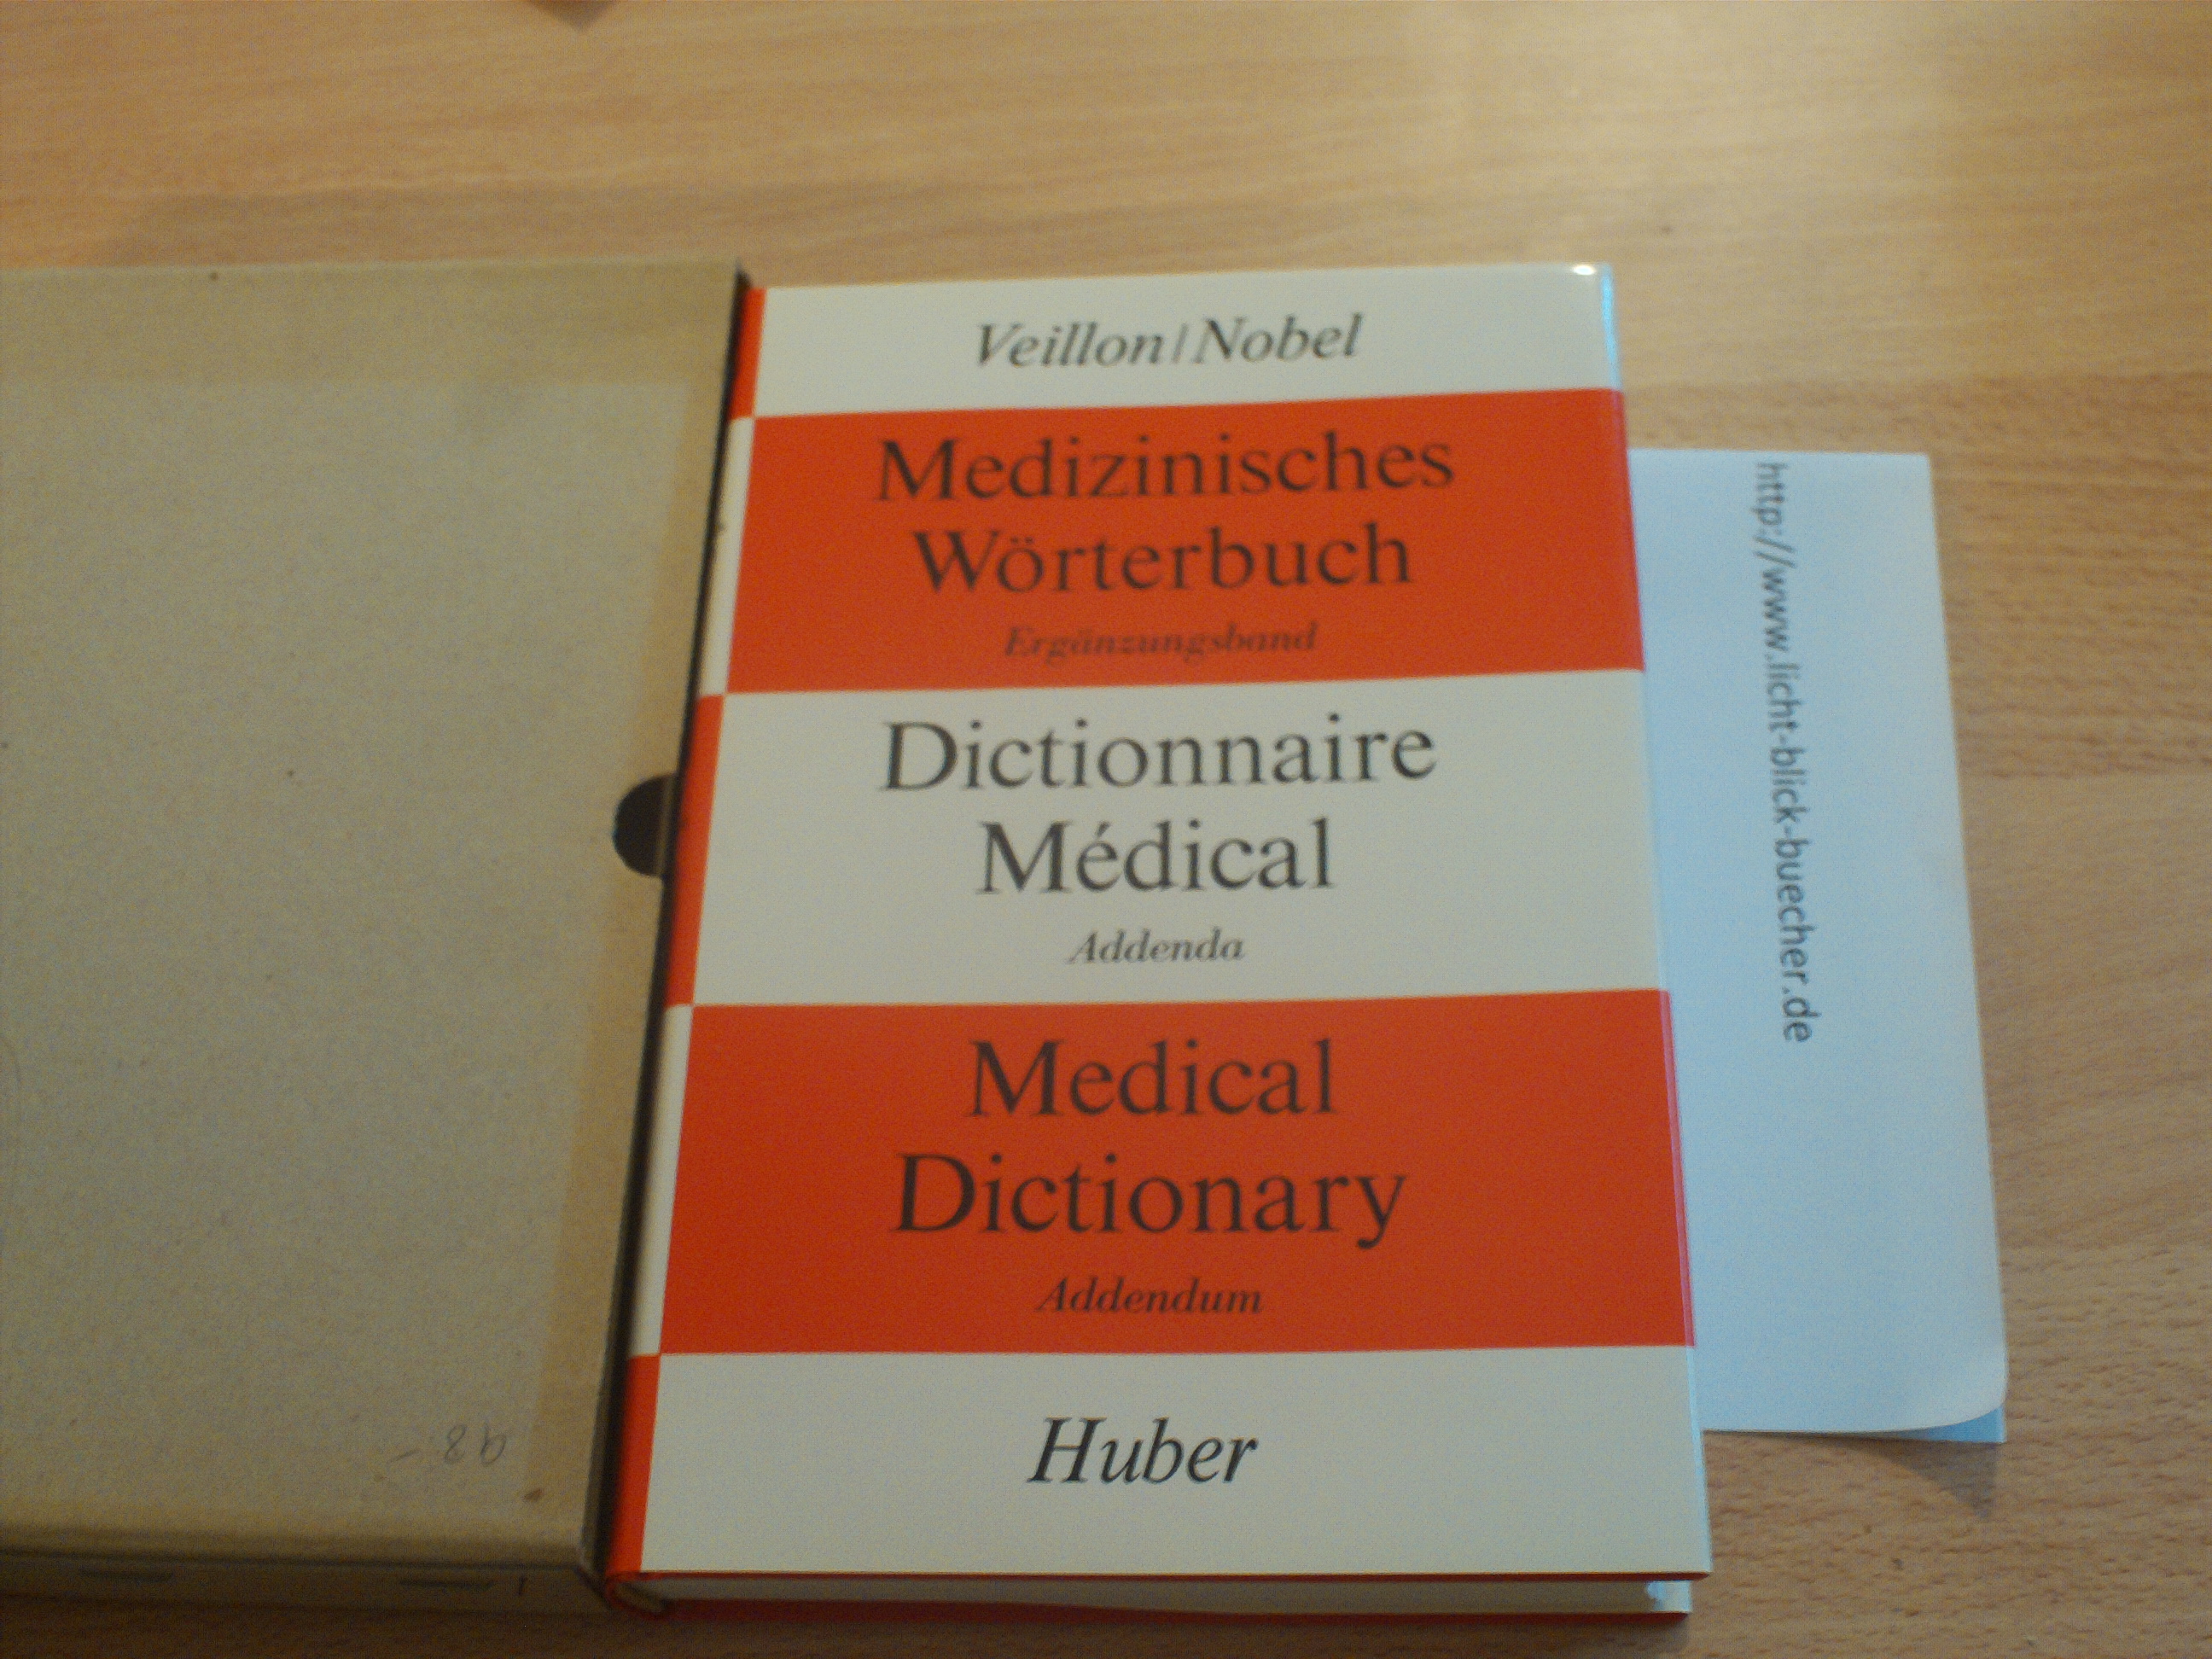 Medizinisches Woerterbuch - Ergaenzungsband Dictionnaire MÃ©dical - Addenda  Medical Dictionary - AddendumVeillon / Nobel